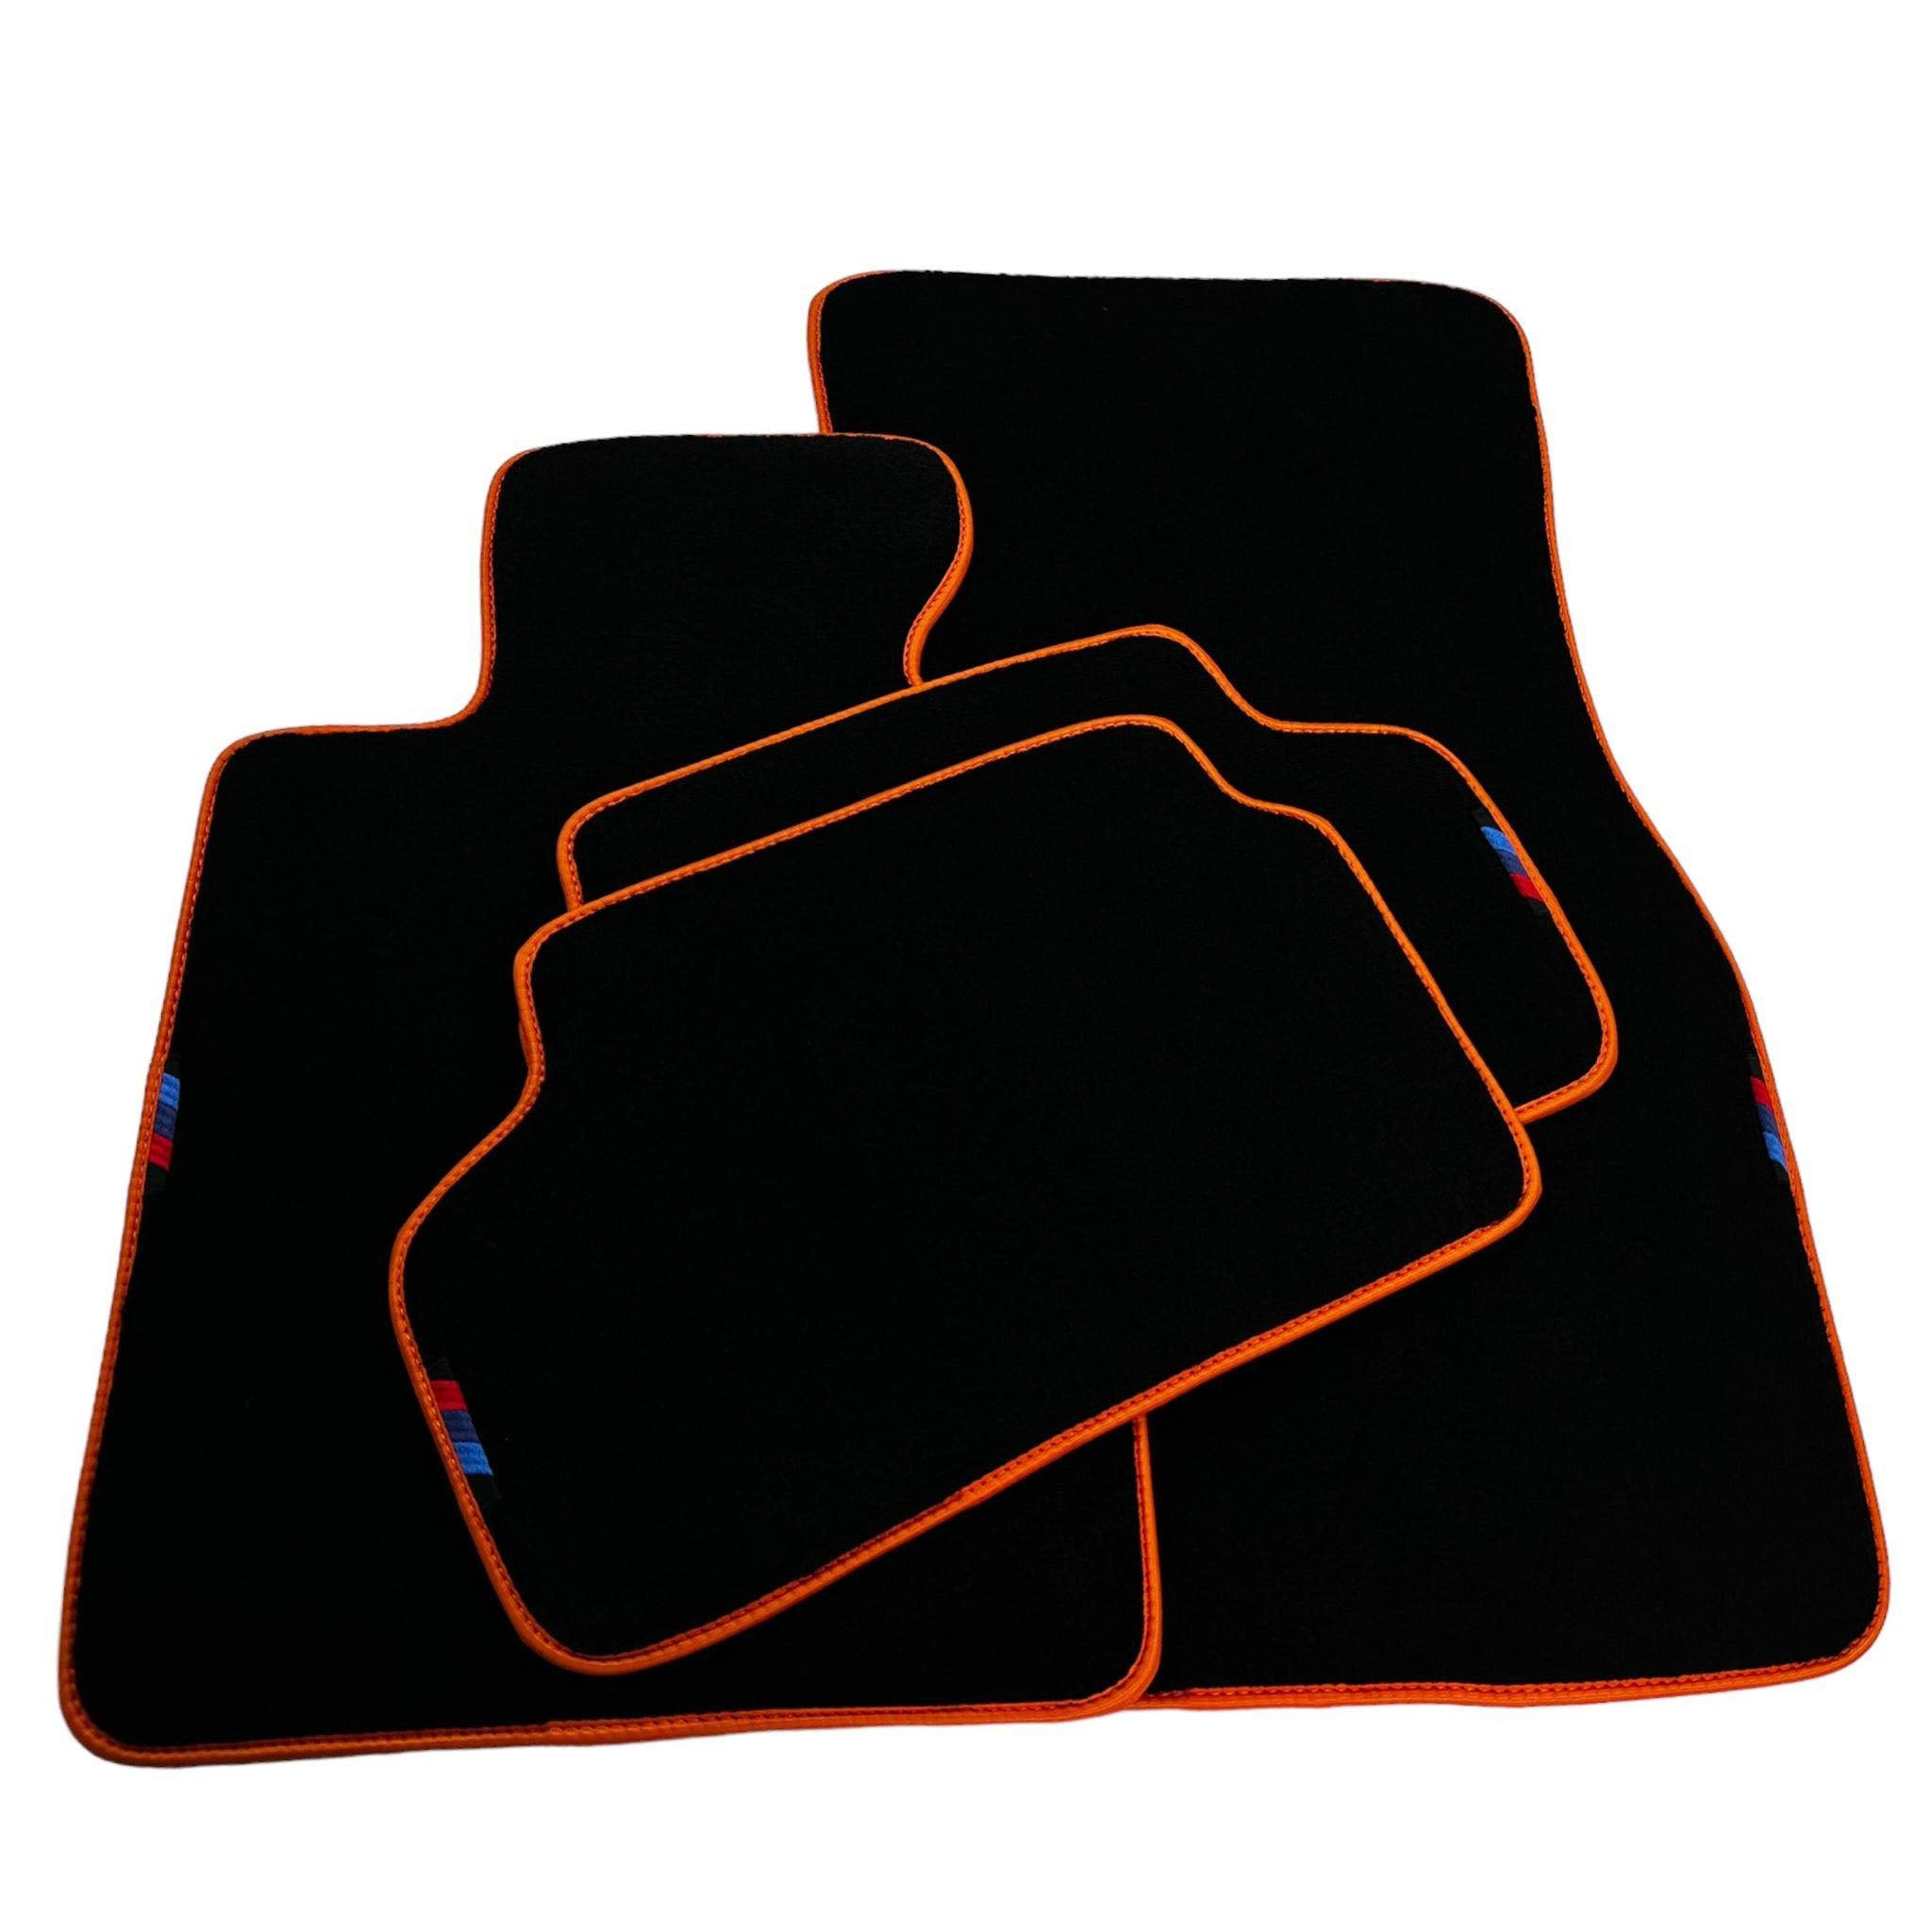 Black Floor Floor Mats For BMW 6 Series G32 GT Gran Turismo | Fighter Jet Edition AutoWin Brand |Orange Trim